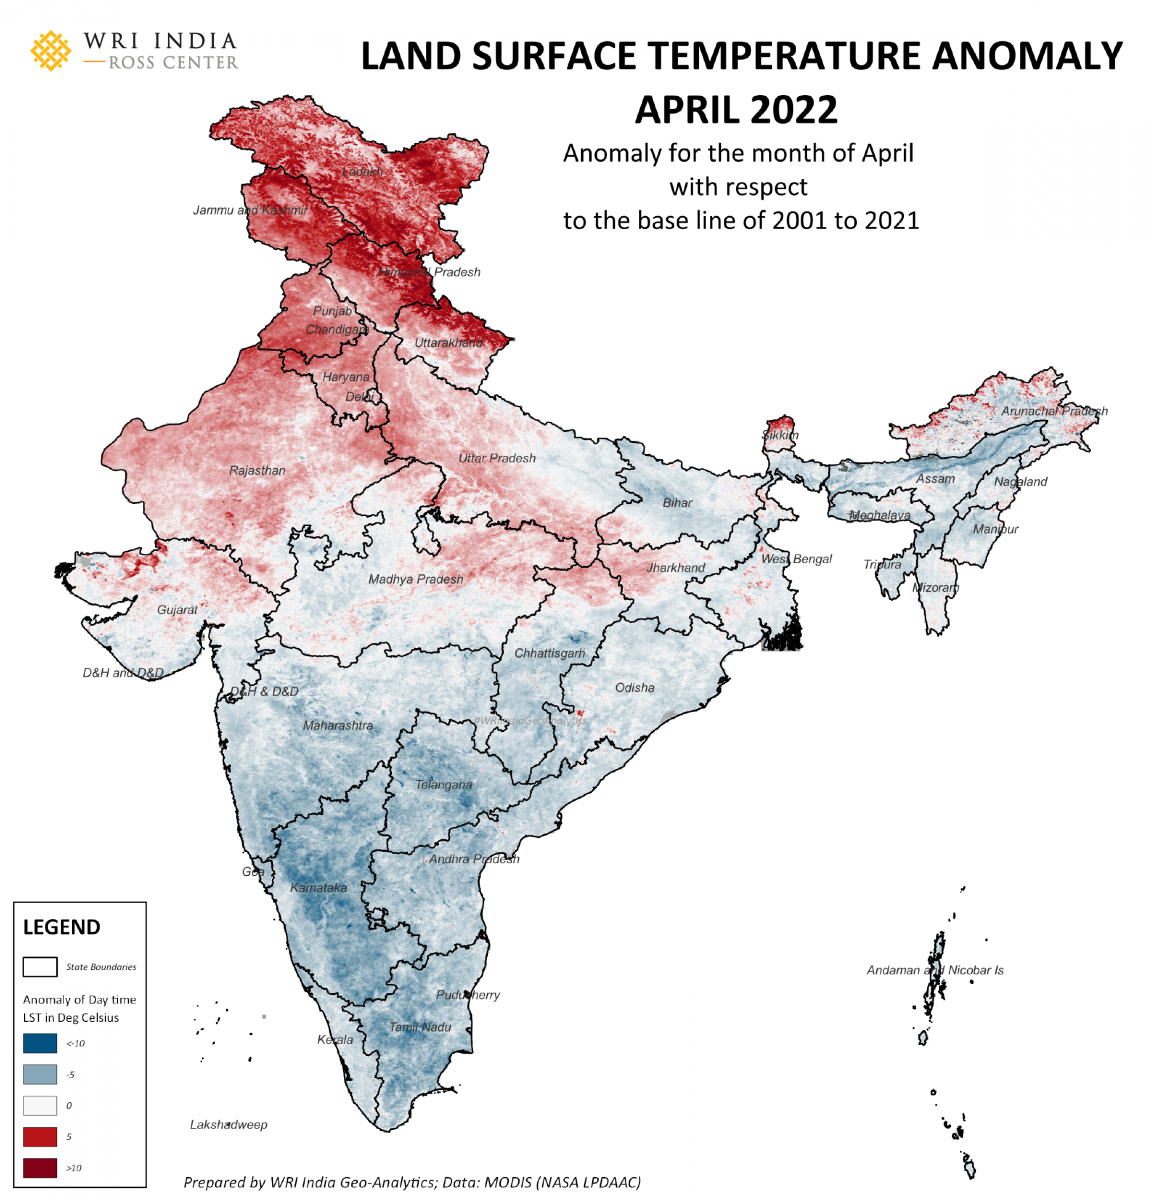 Maps show anomalies of maximum air temperature and surface temperature.